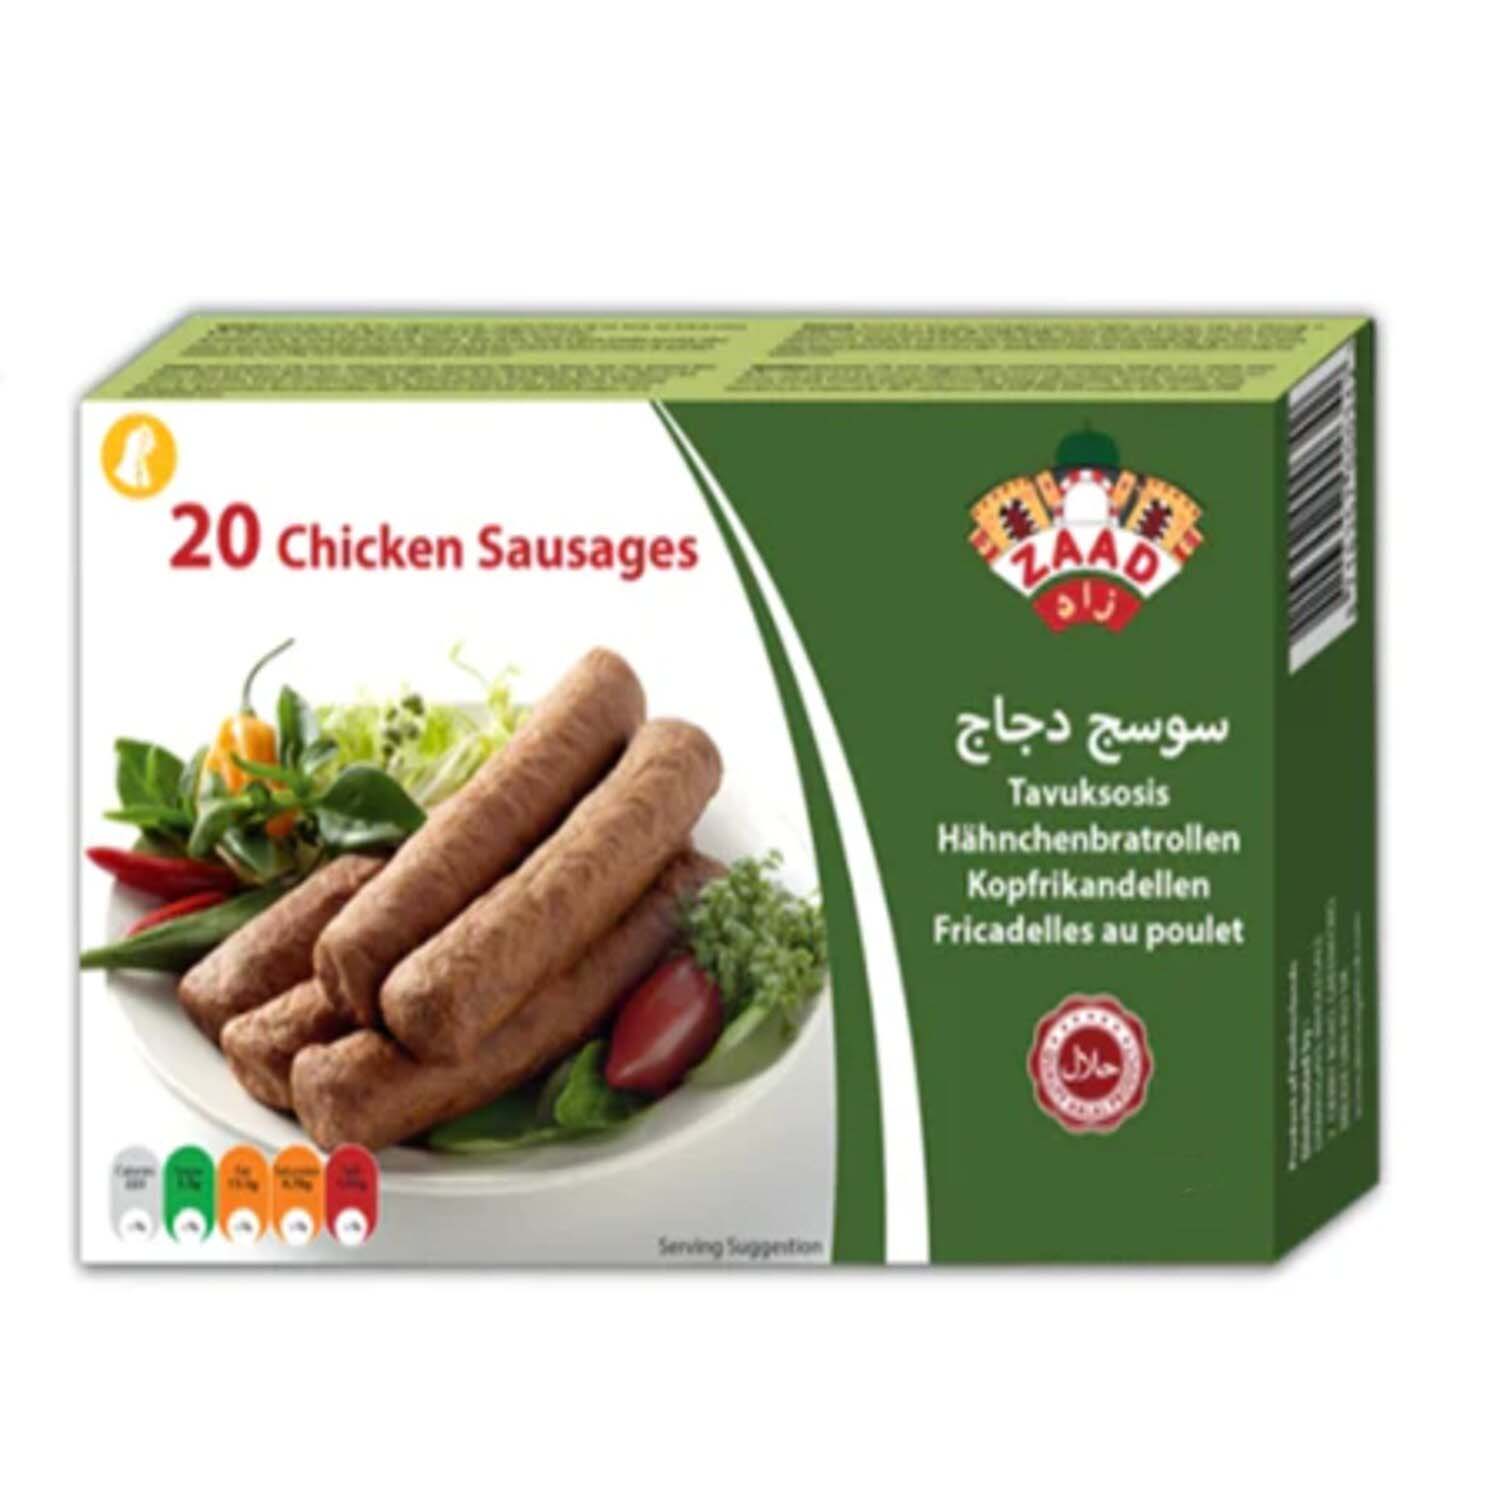 Offer Zaad Chicken Sausage Halal 20Pcs X 2 Packs